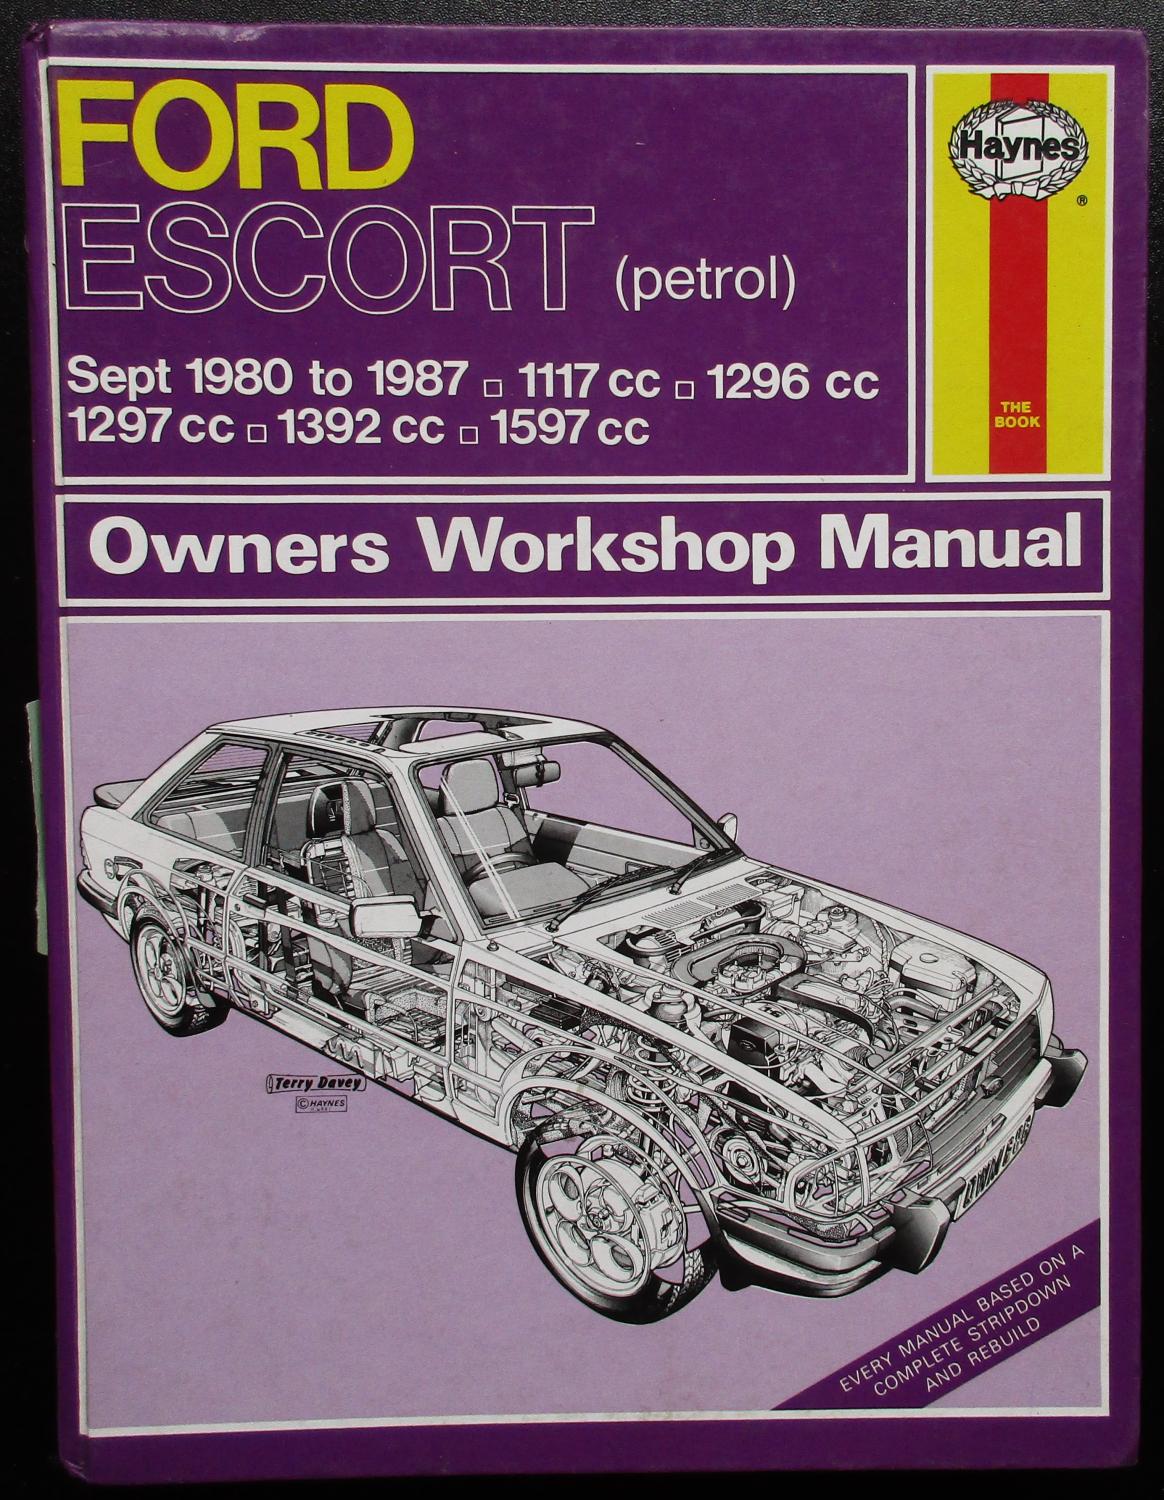 Ford Escort (petrol) 1980-87 1117cc, 1297cc, 1392cc & 1597cc (Owners workshop manual / Haynes) - Mead, John S